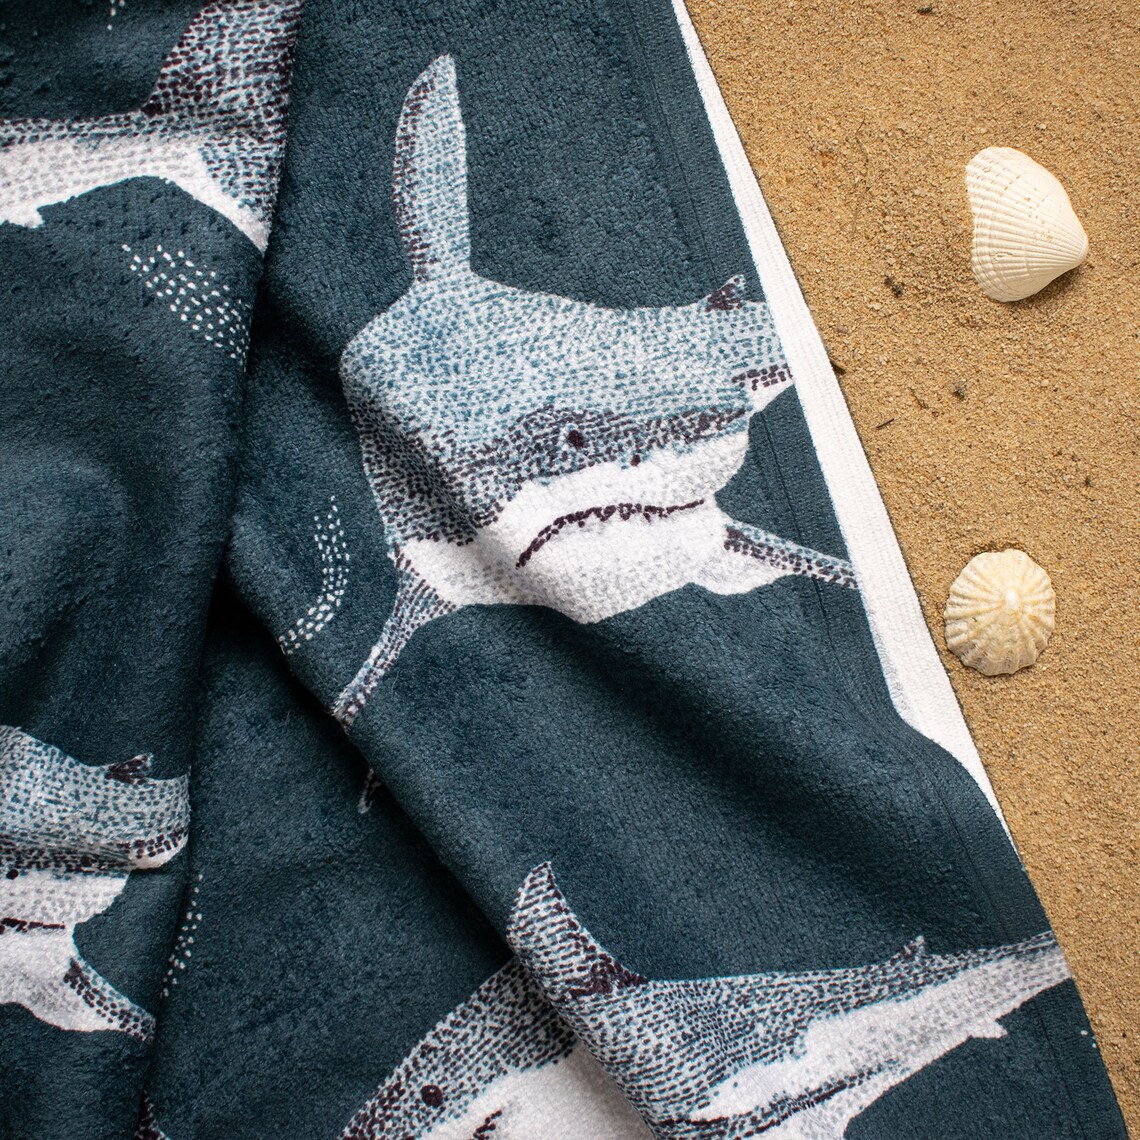 Shark beach towel swimming bathroom beach towel made from | Etsy